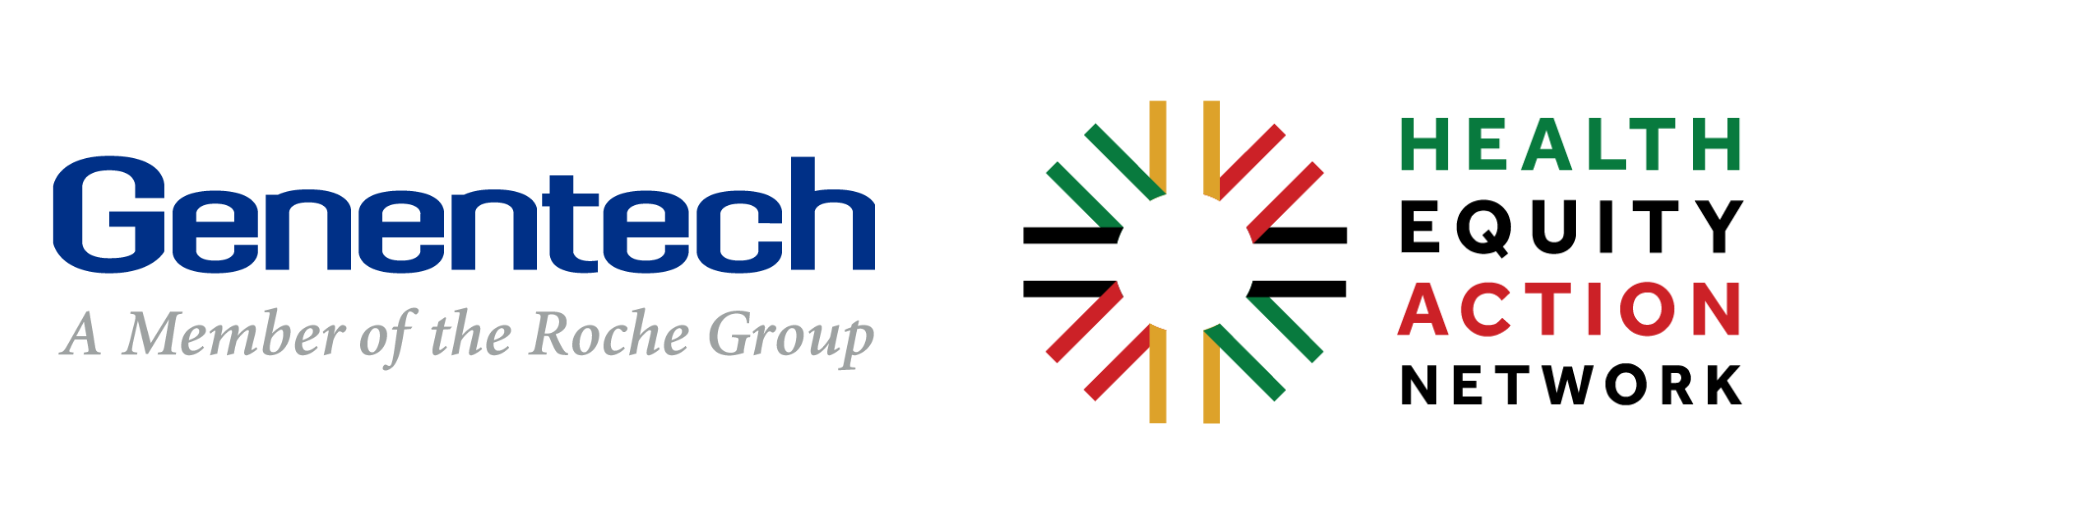 Logos: Genentech, Health Equity Action Network